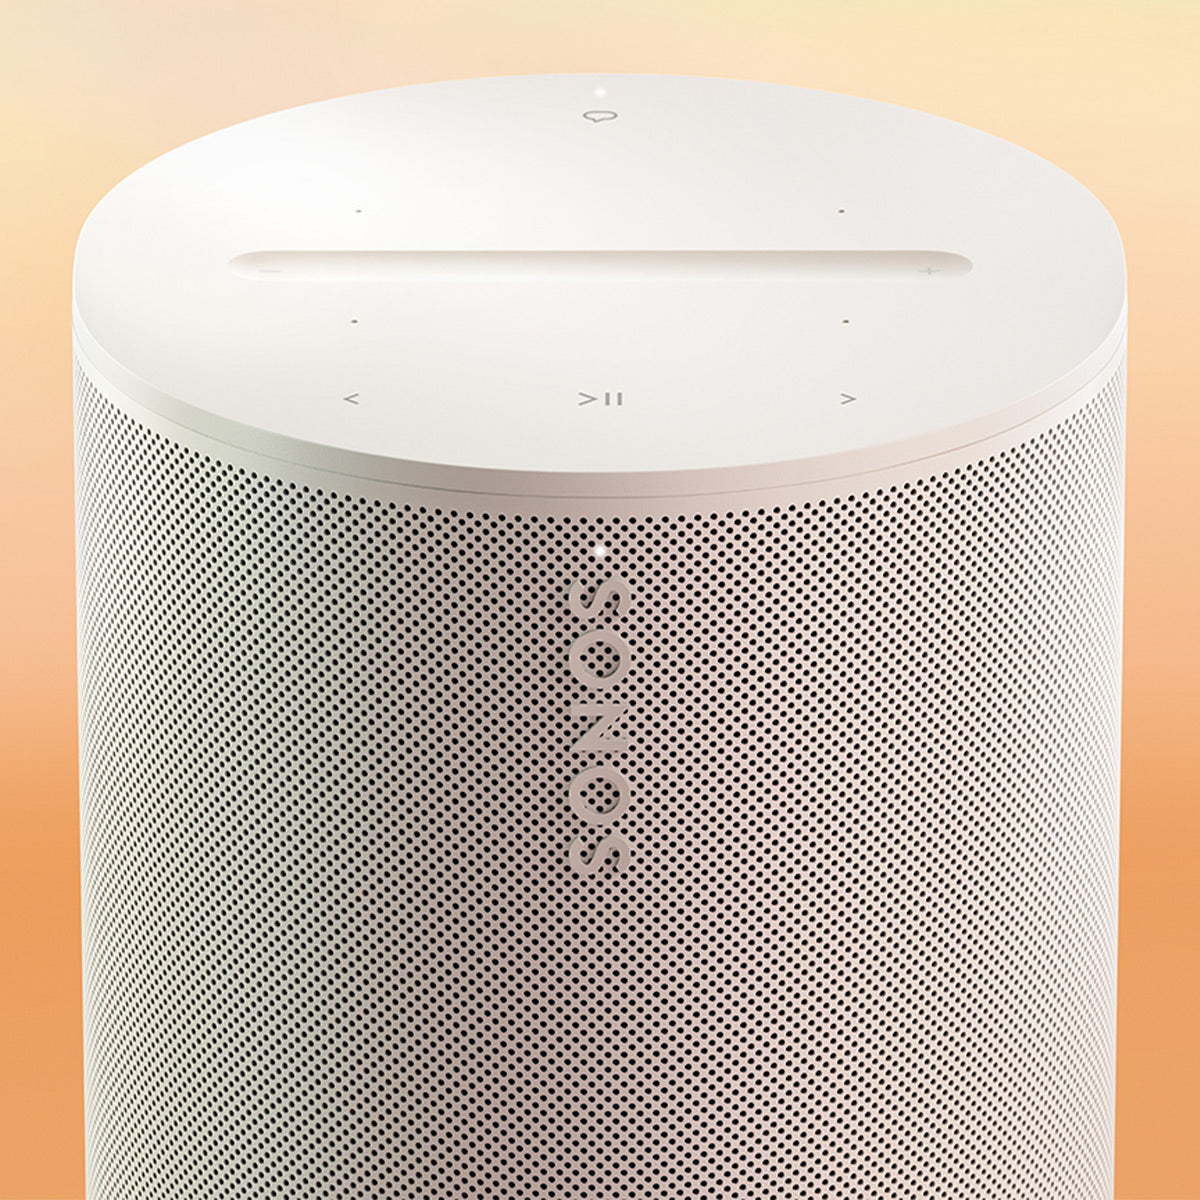 Victrola Stream Onyx Works with Sonos Wireless Turntable with Pair of Sonos Era 100 Wireless Smart Speaker (White)